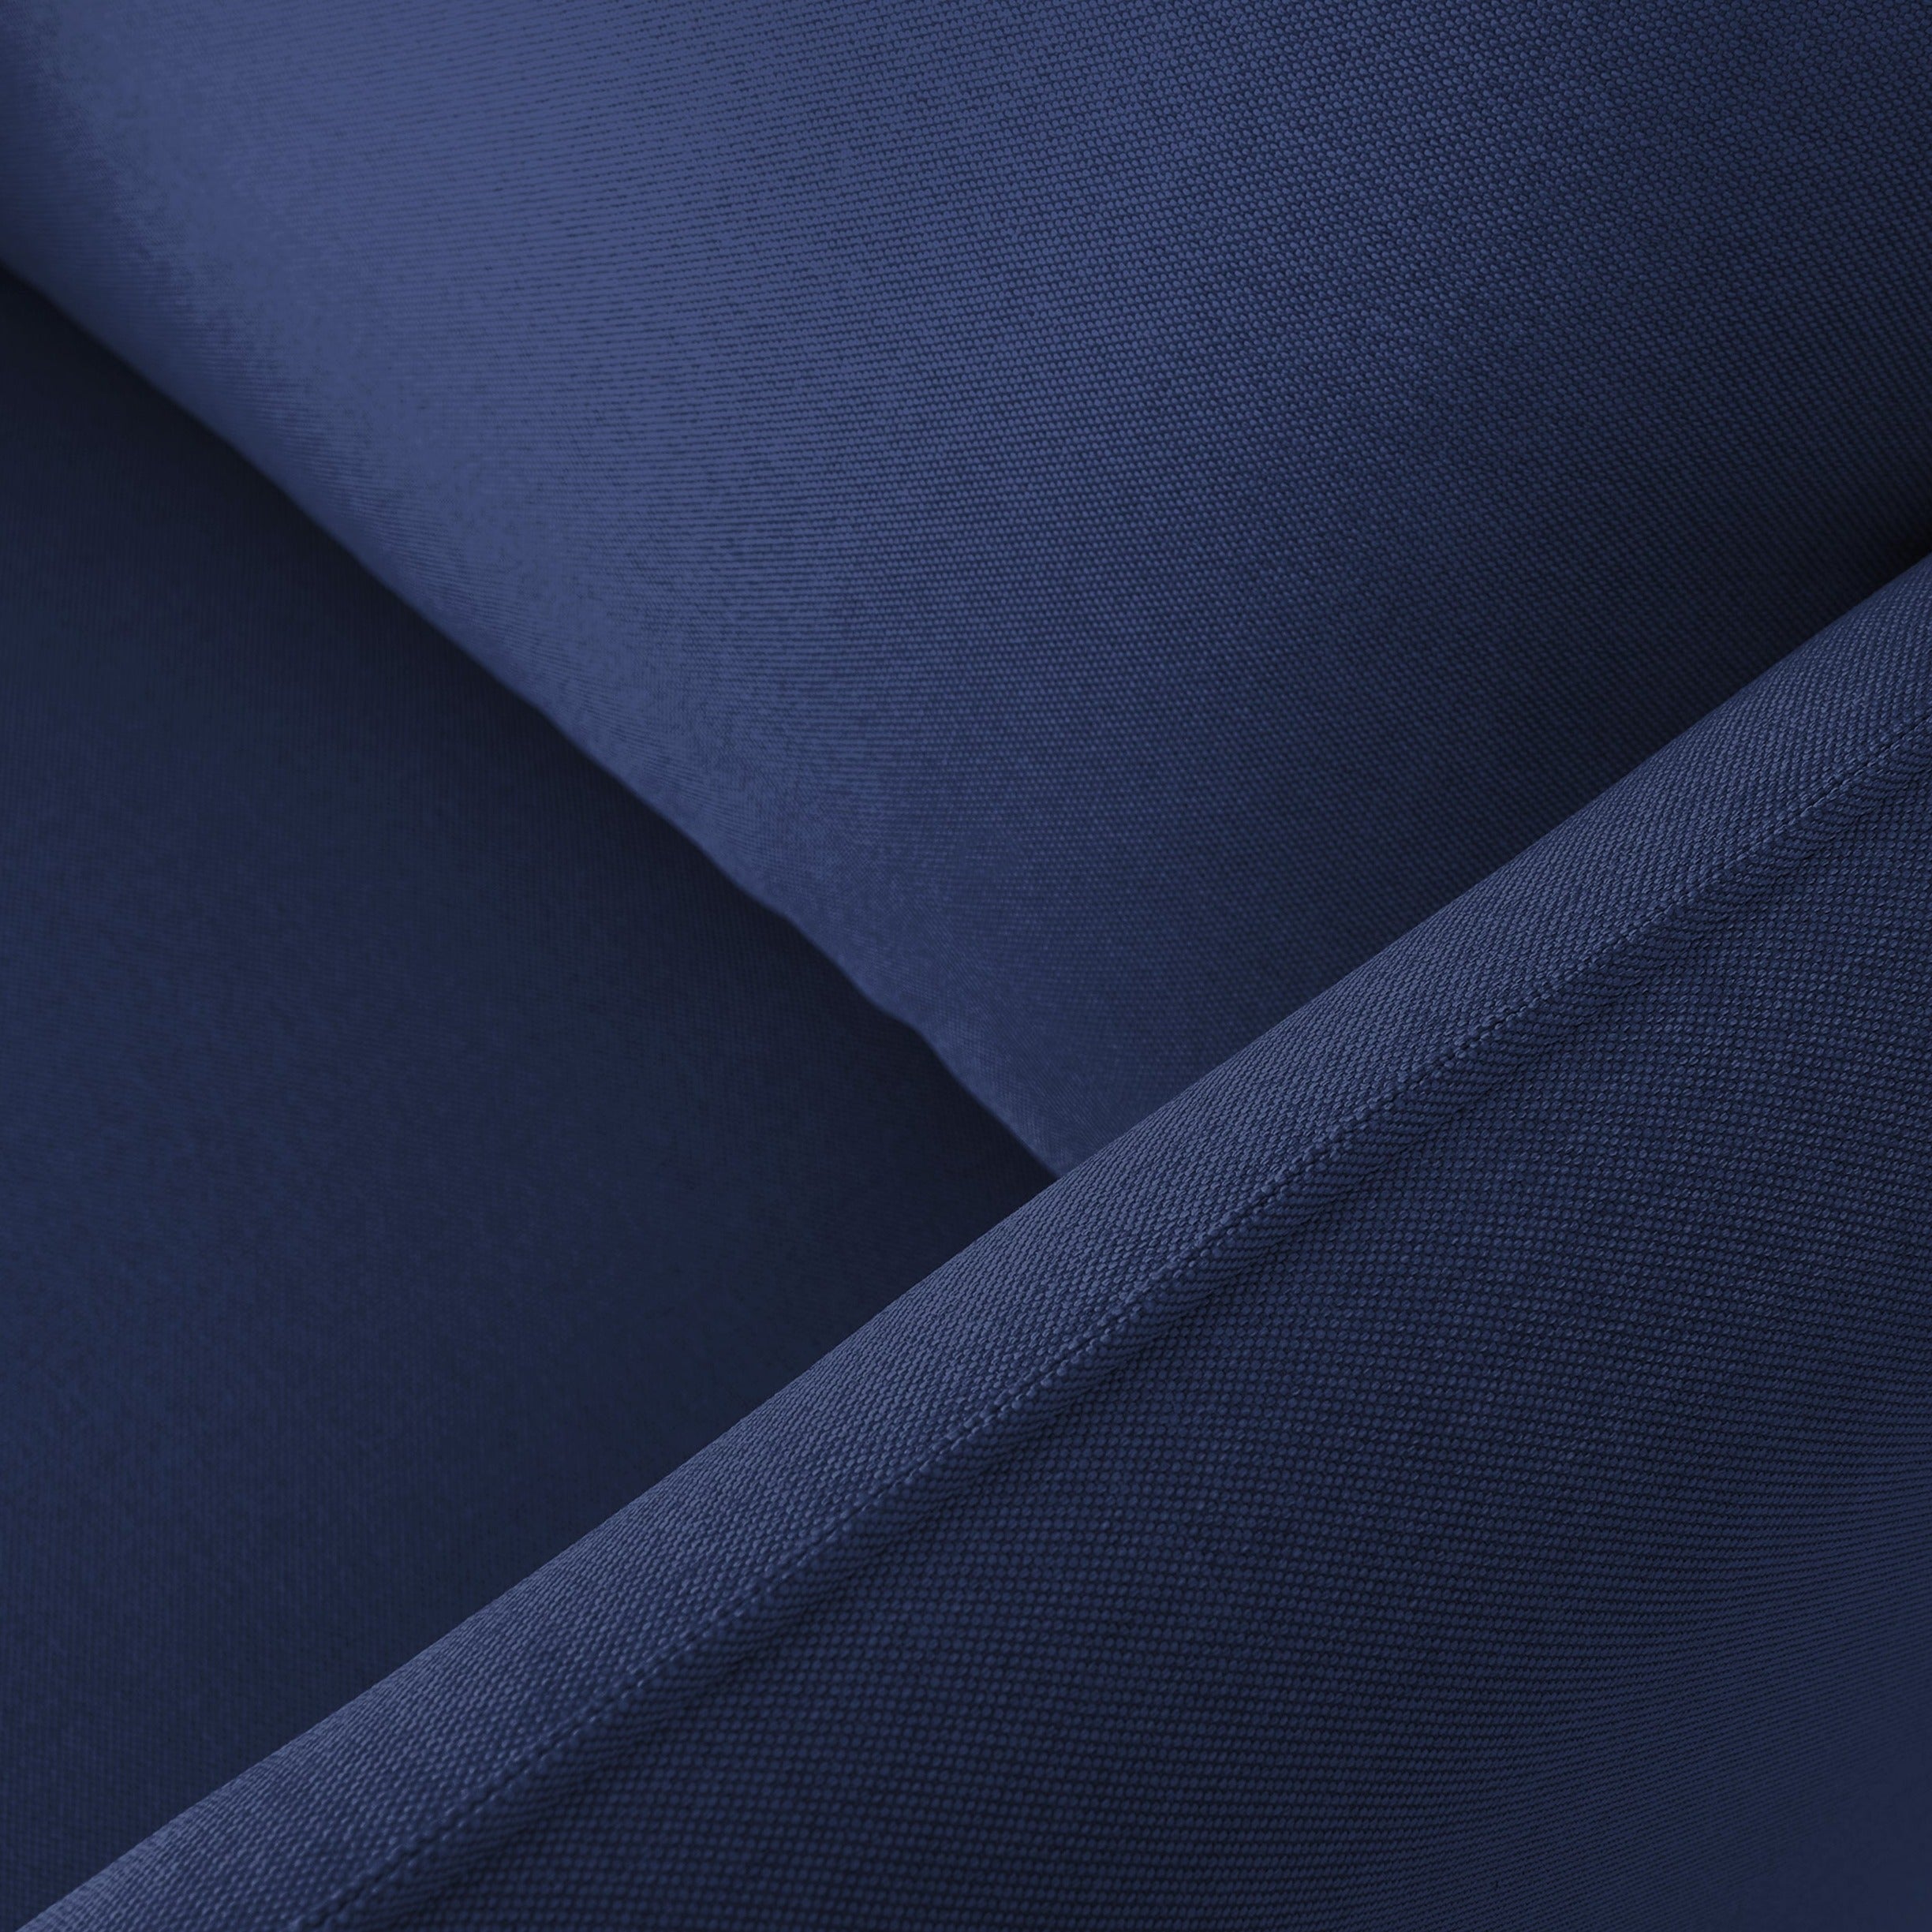 POSH BLACK Armchair upholstery colour blue-crop view